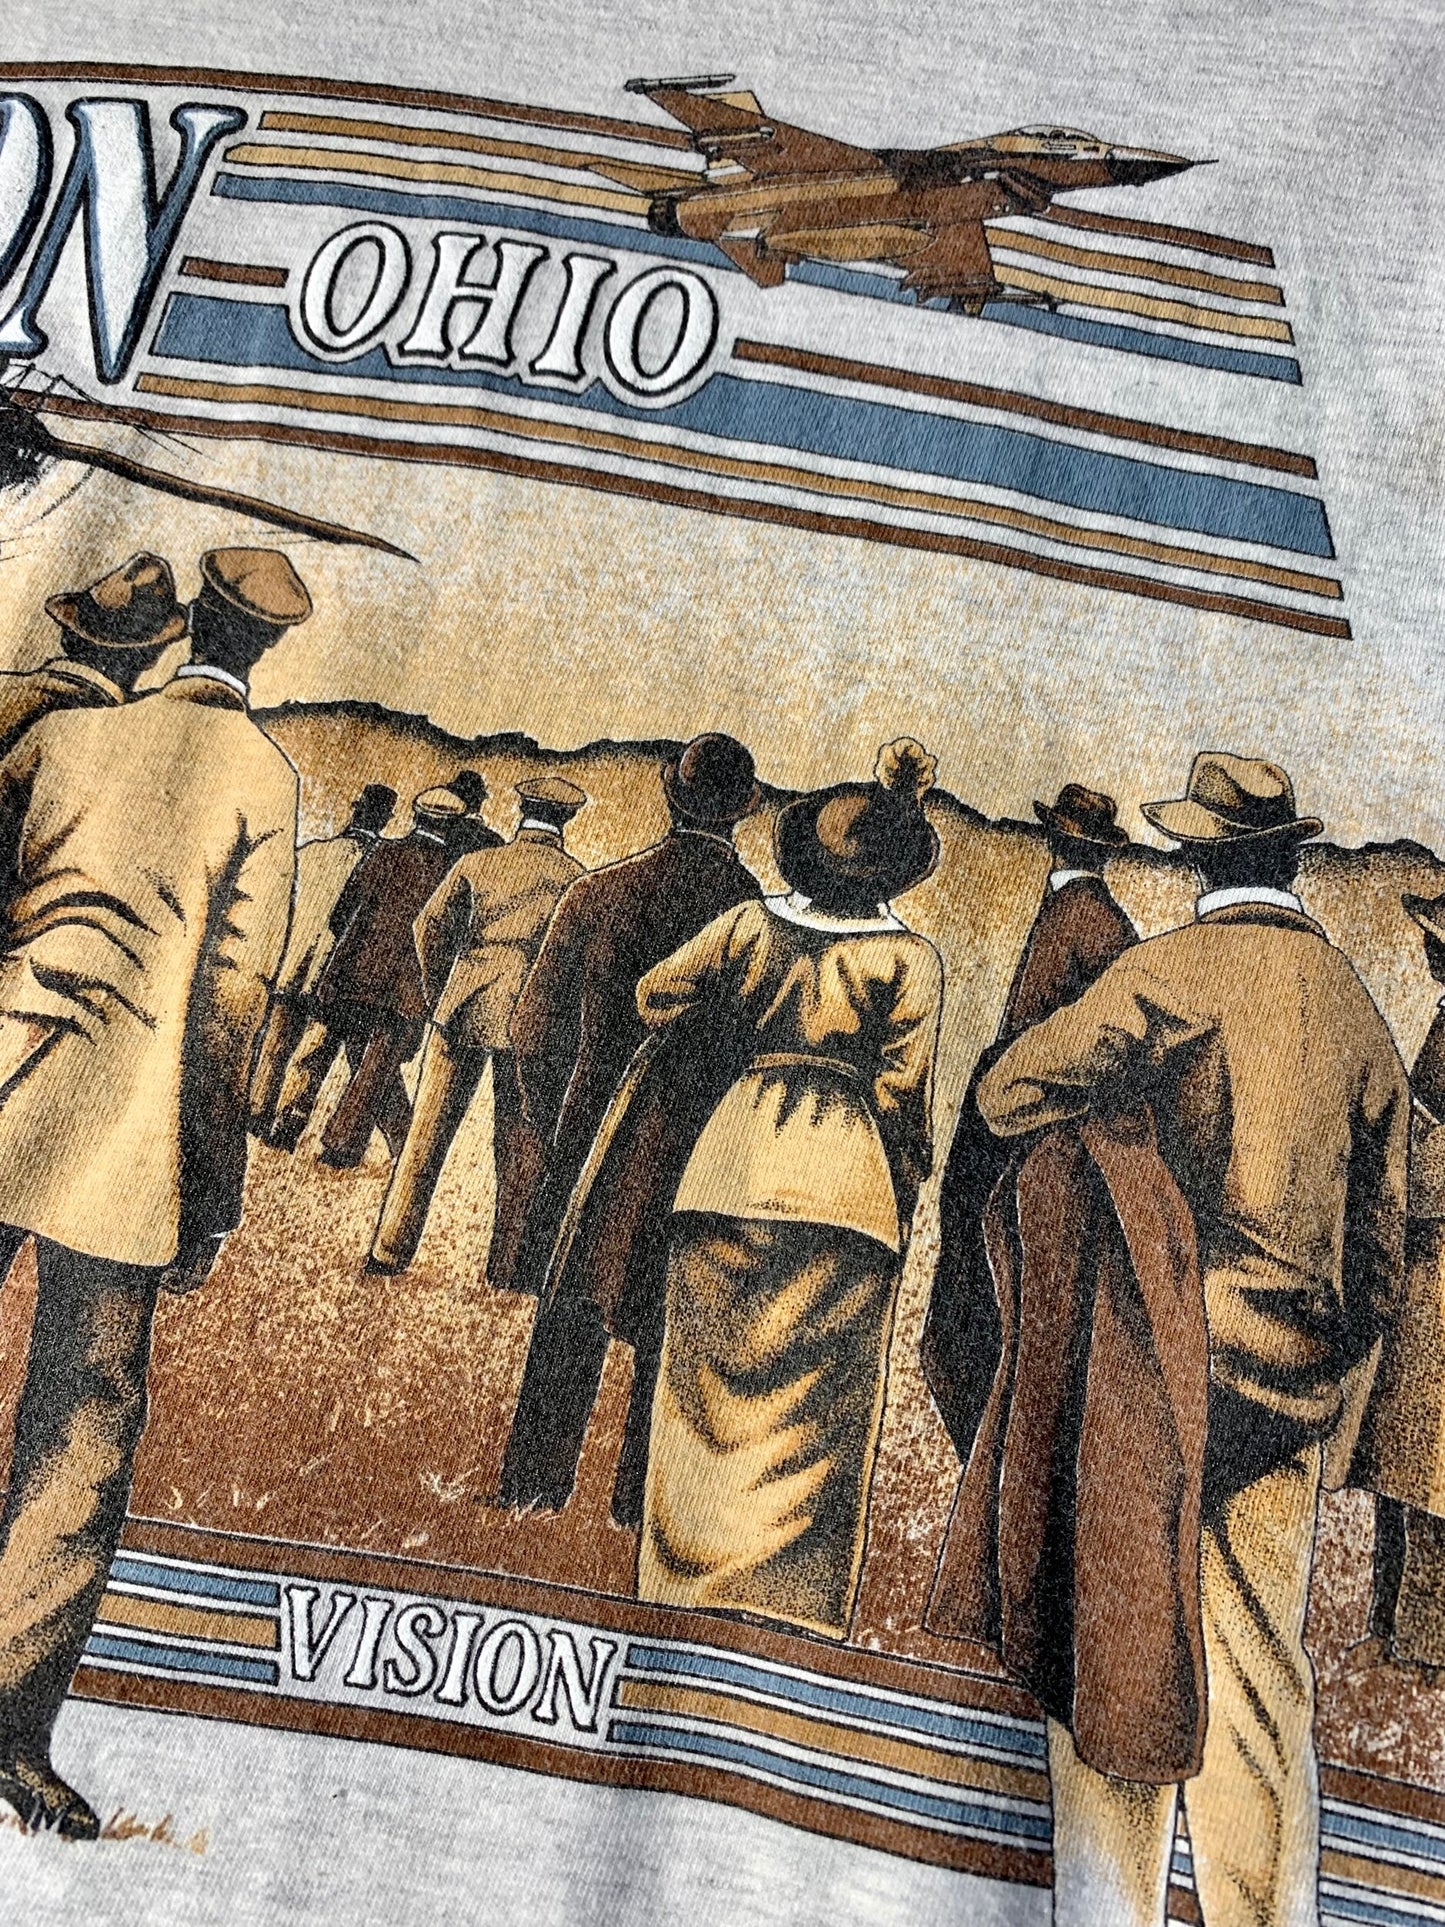 Vintage Dayton Ohio ‘93 T-Shirt